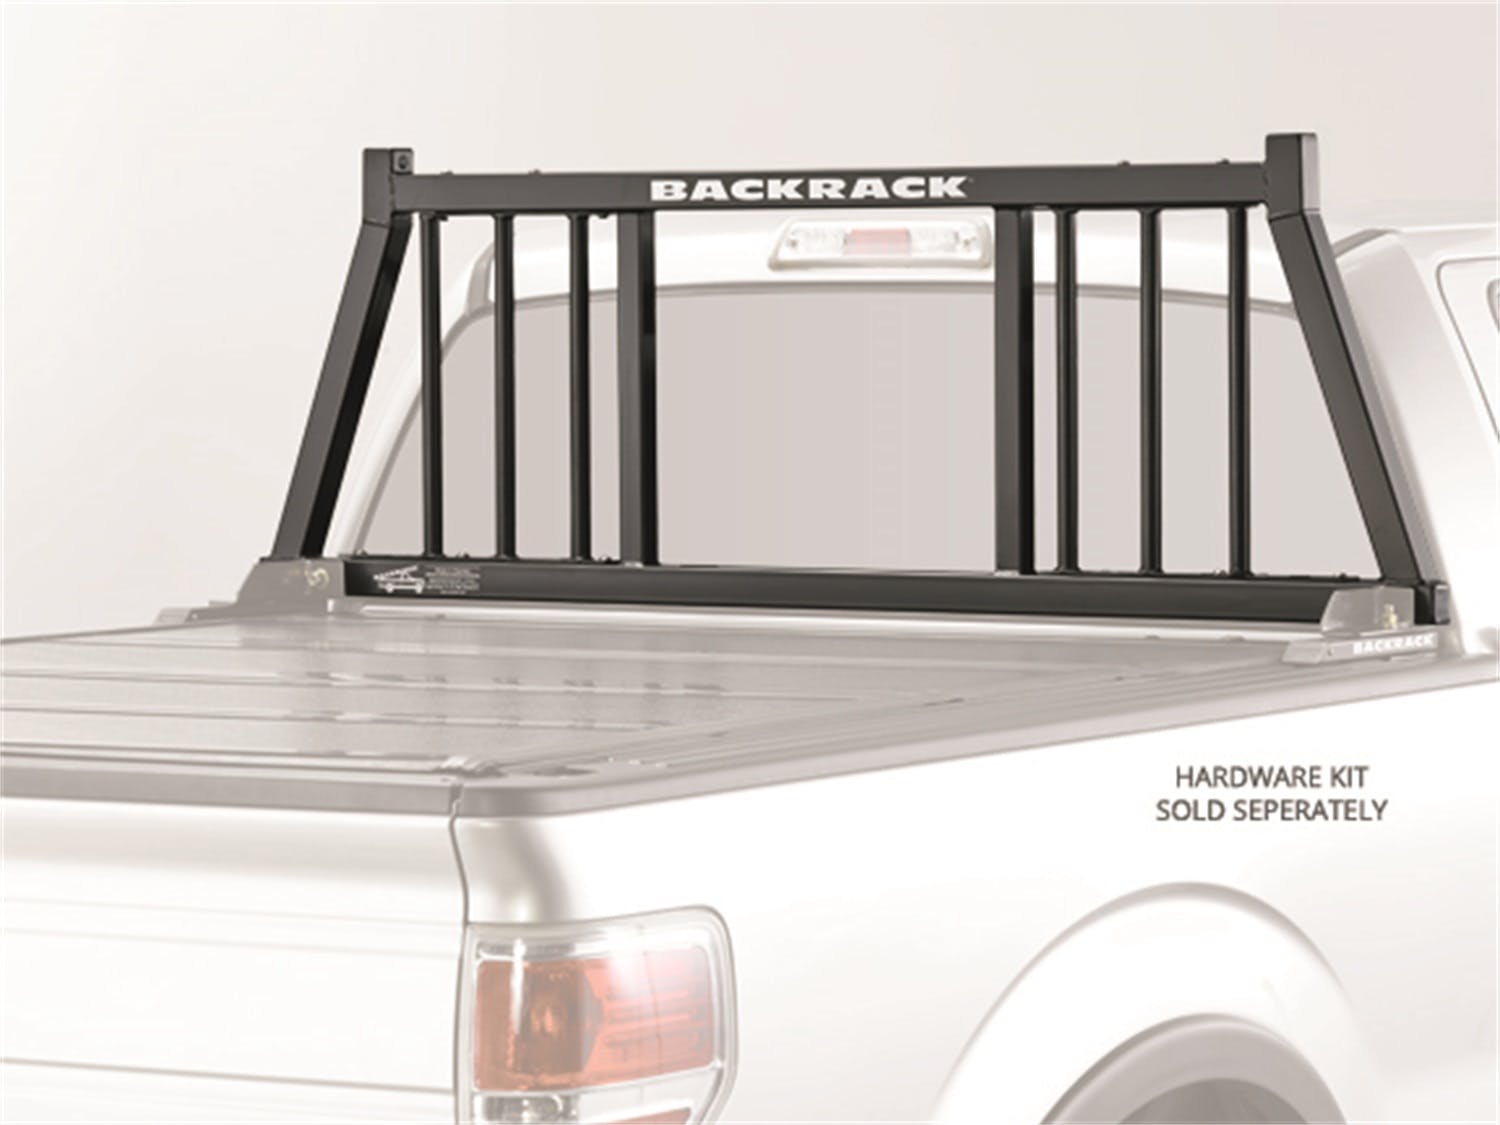 BACKRACK 147TR Frame Only, Hardware Kit Required - 30201, 30221